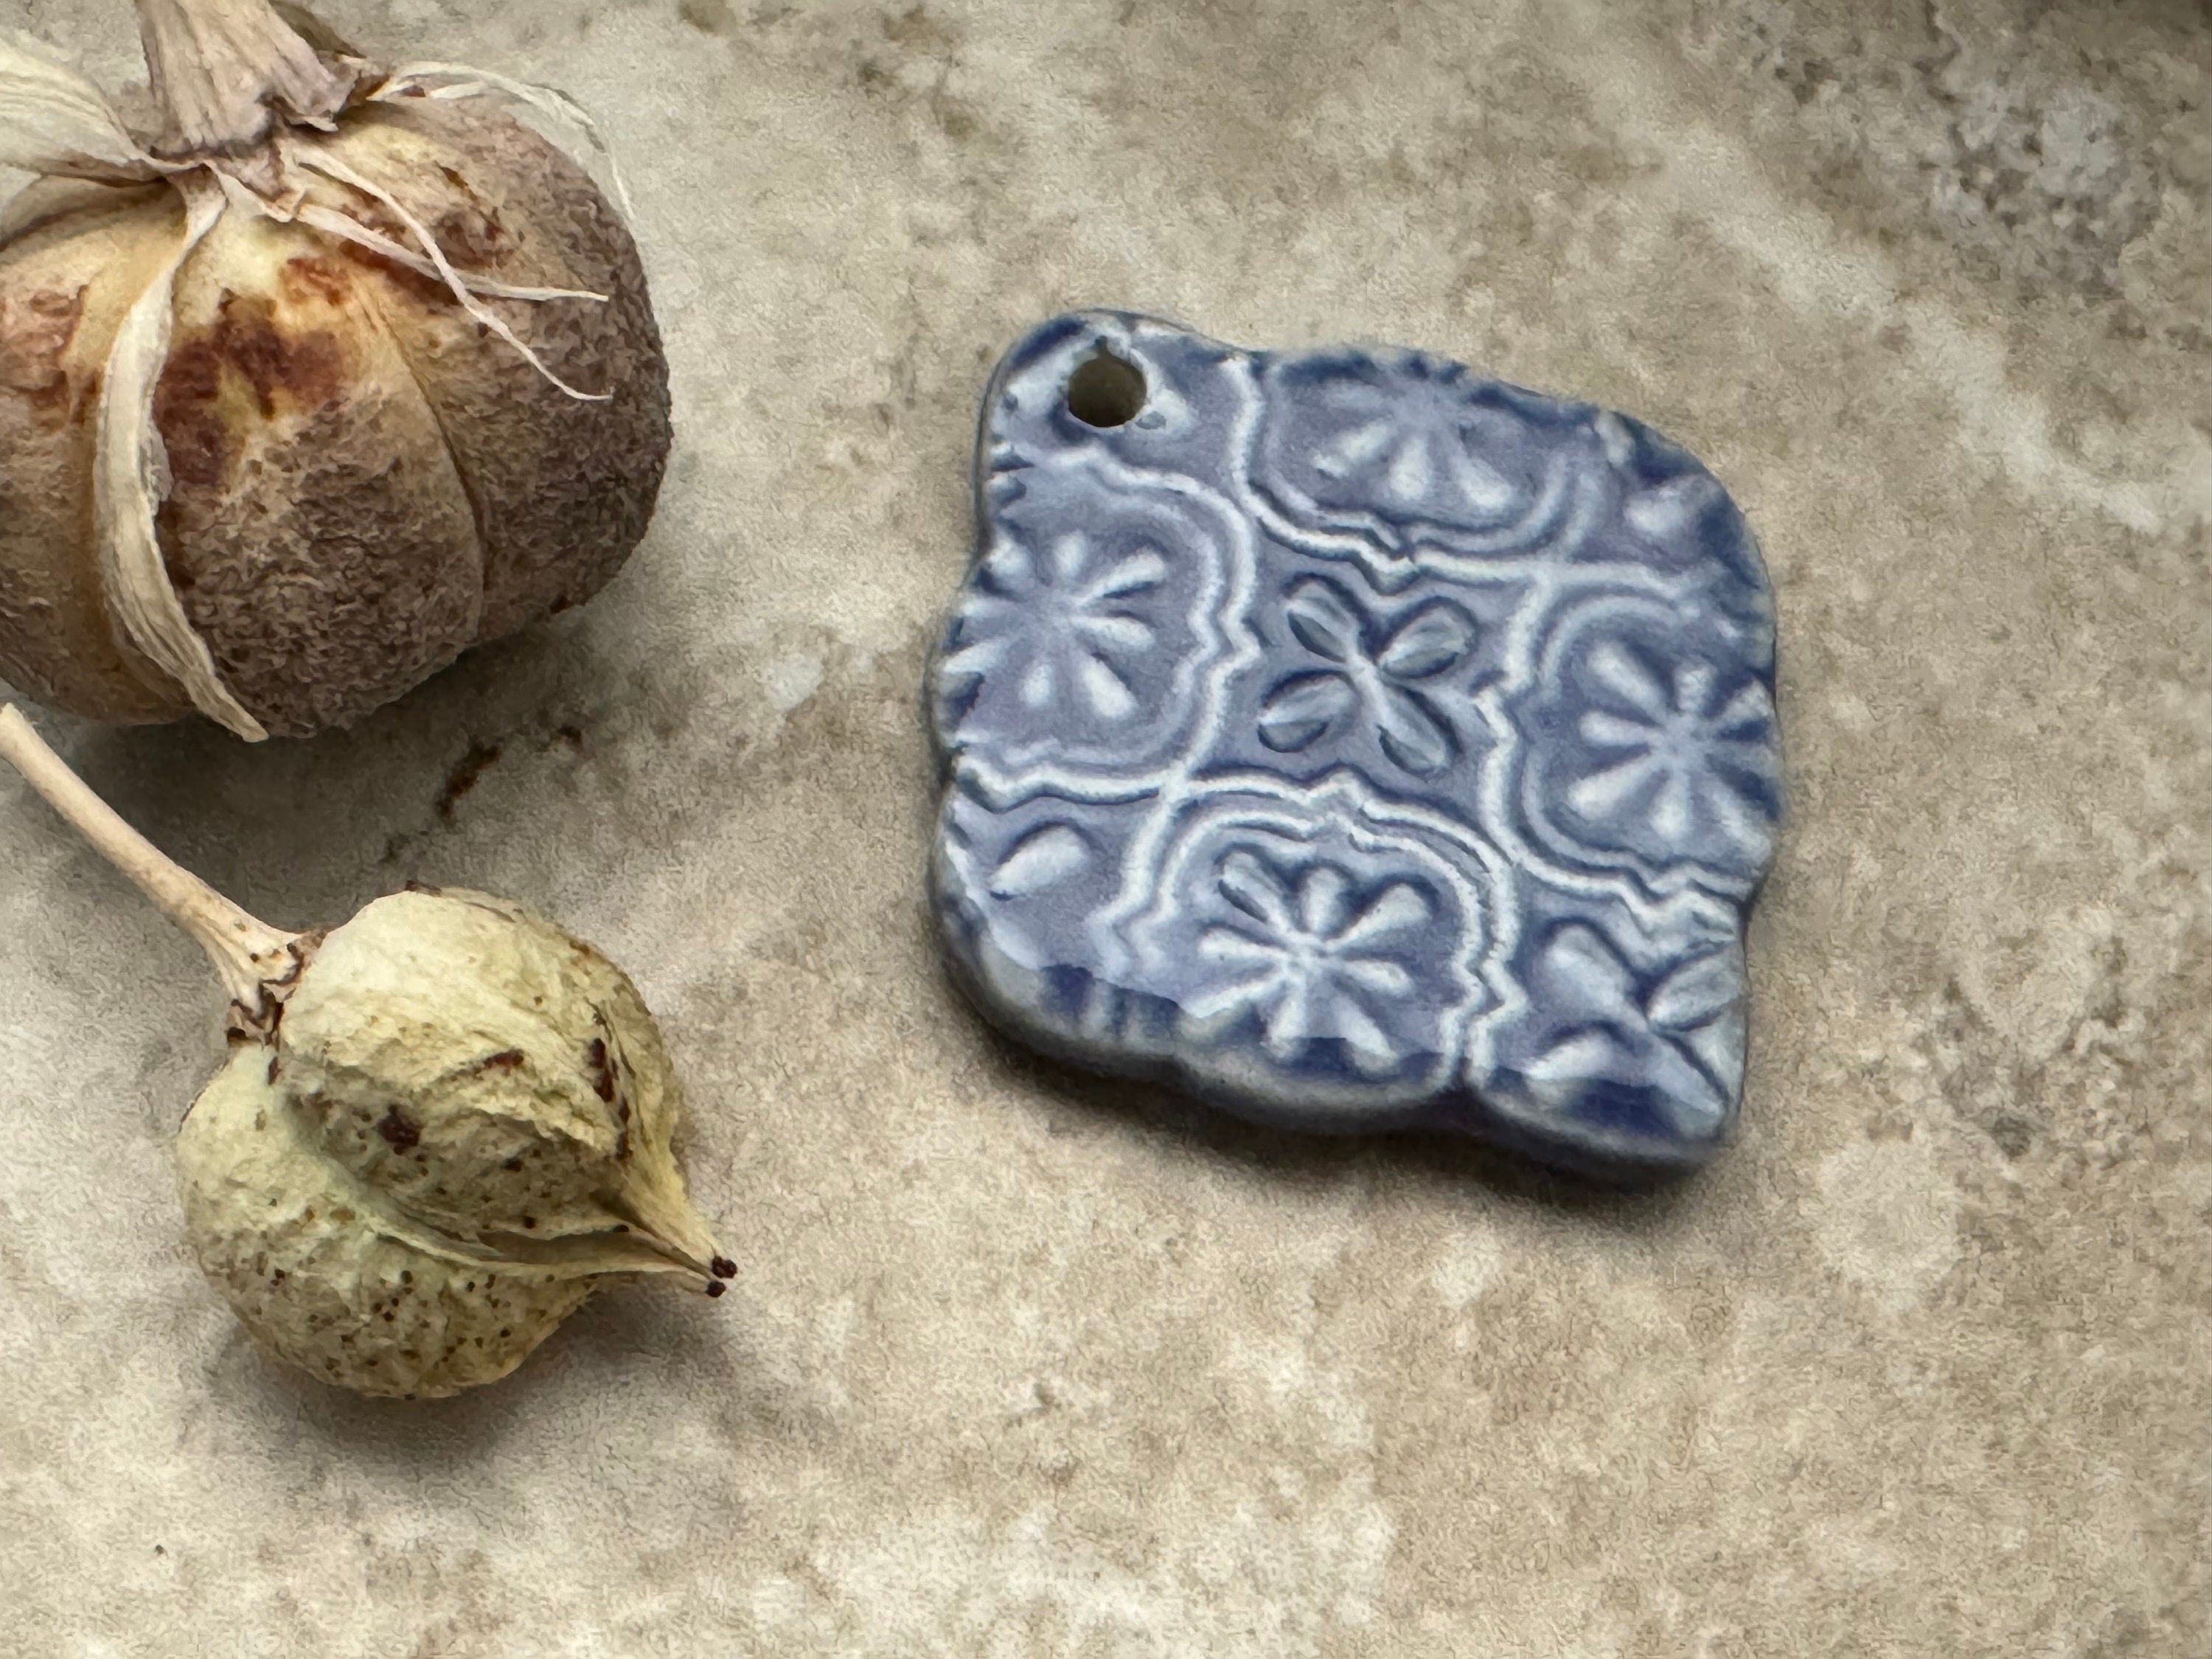 Blue Filigree Pendant, Light Blue, Delicate Pendant, Porcelain Ceramic Pendant, Jewelry Making Components, Make a Necklace